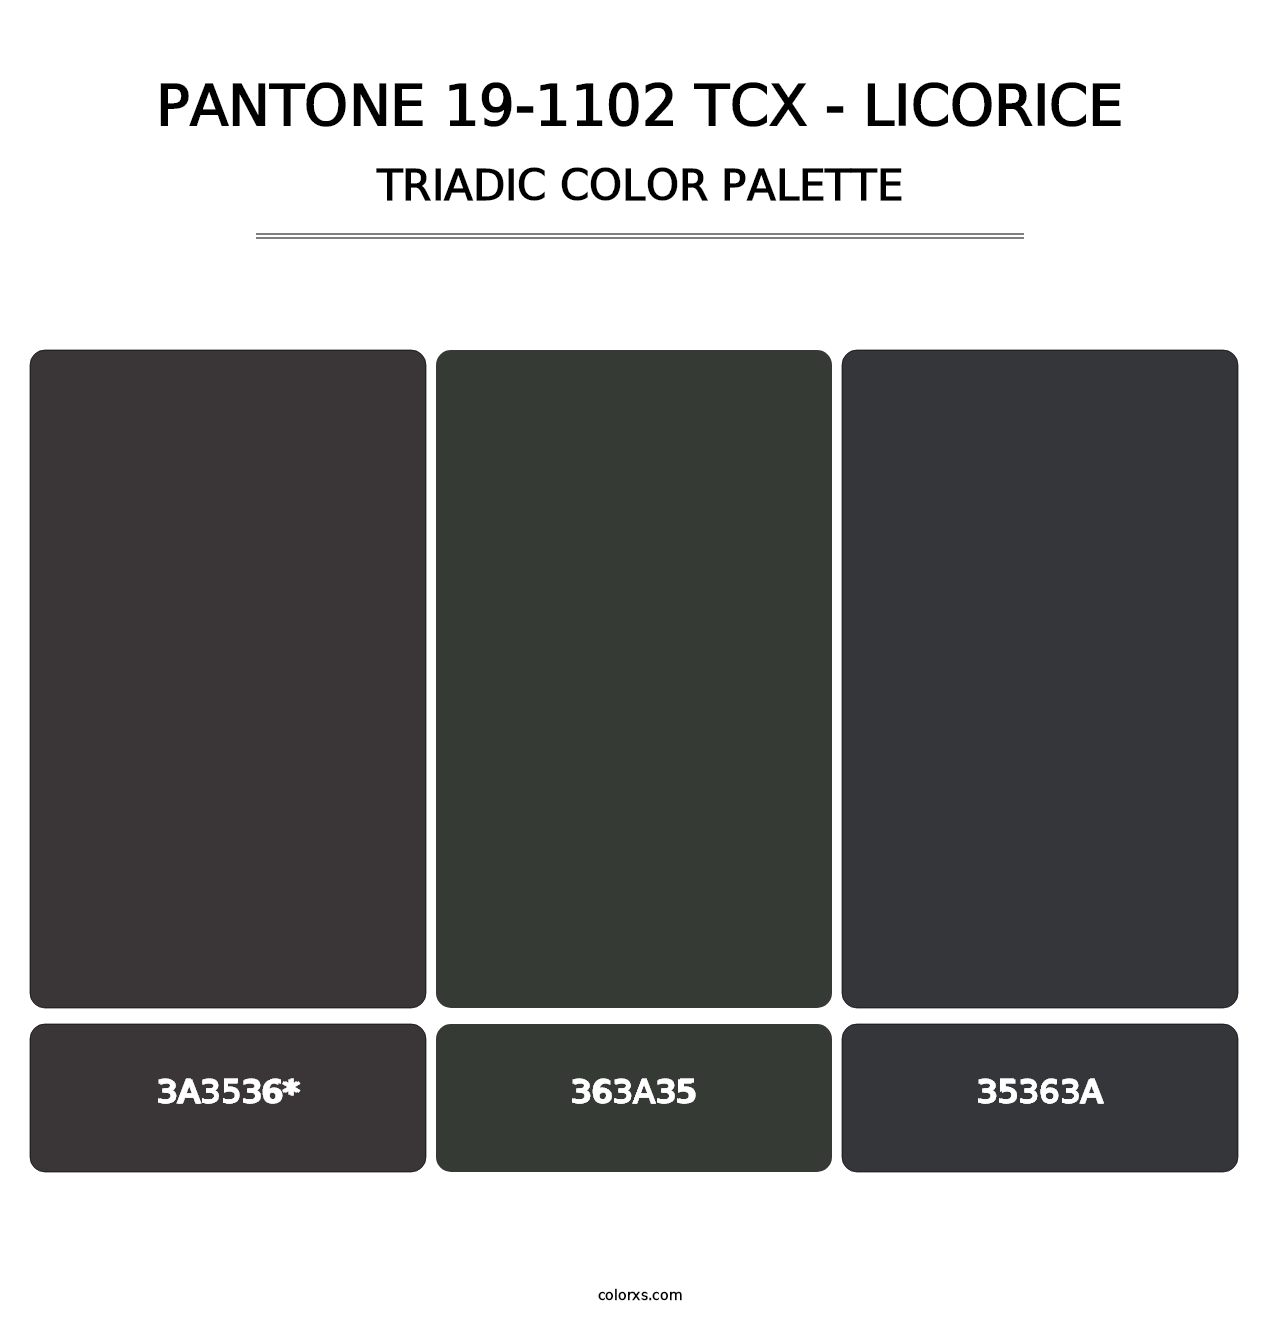 PANTONE 19-1102 TCX - Licorice - Triadic Color Palette